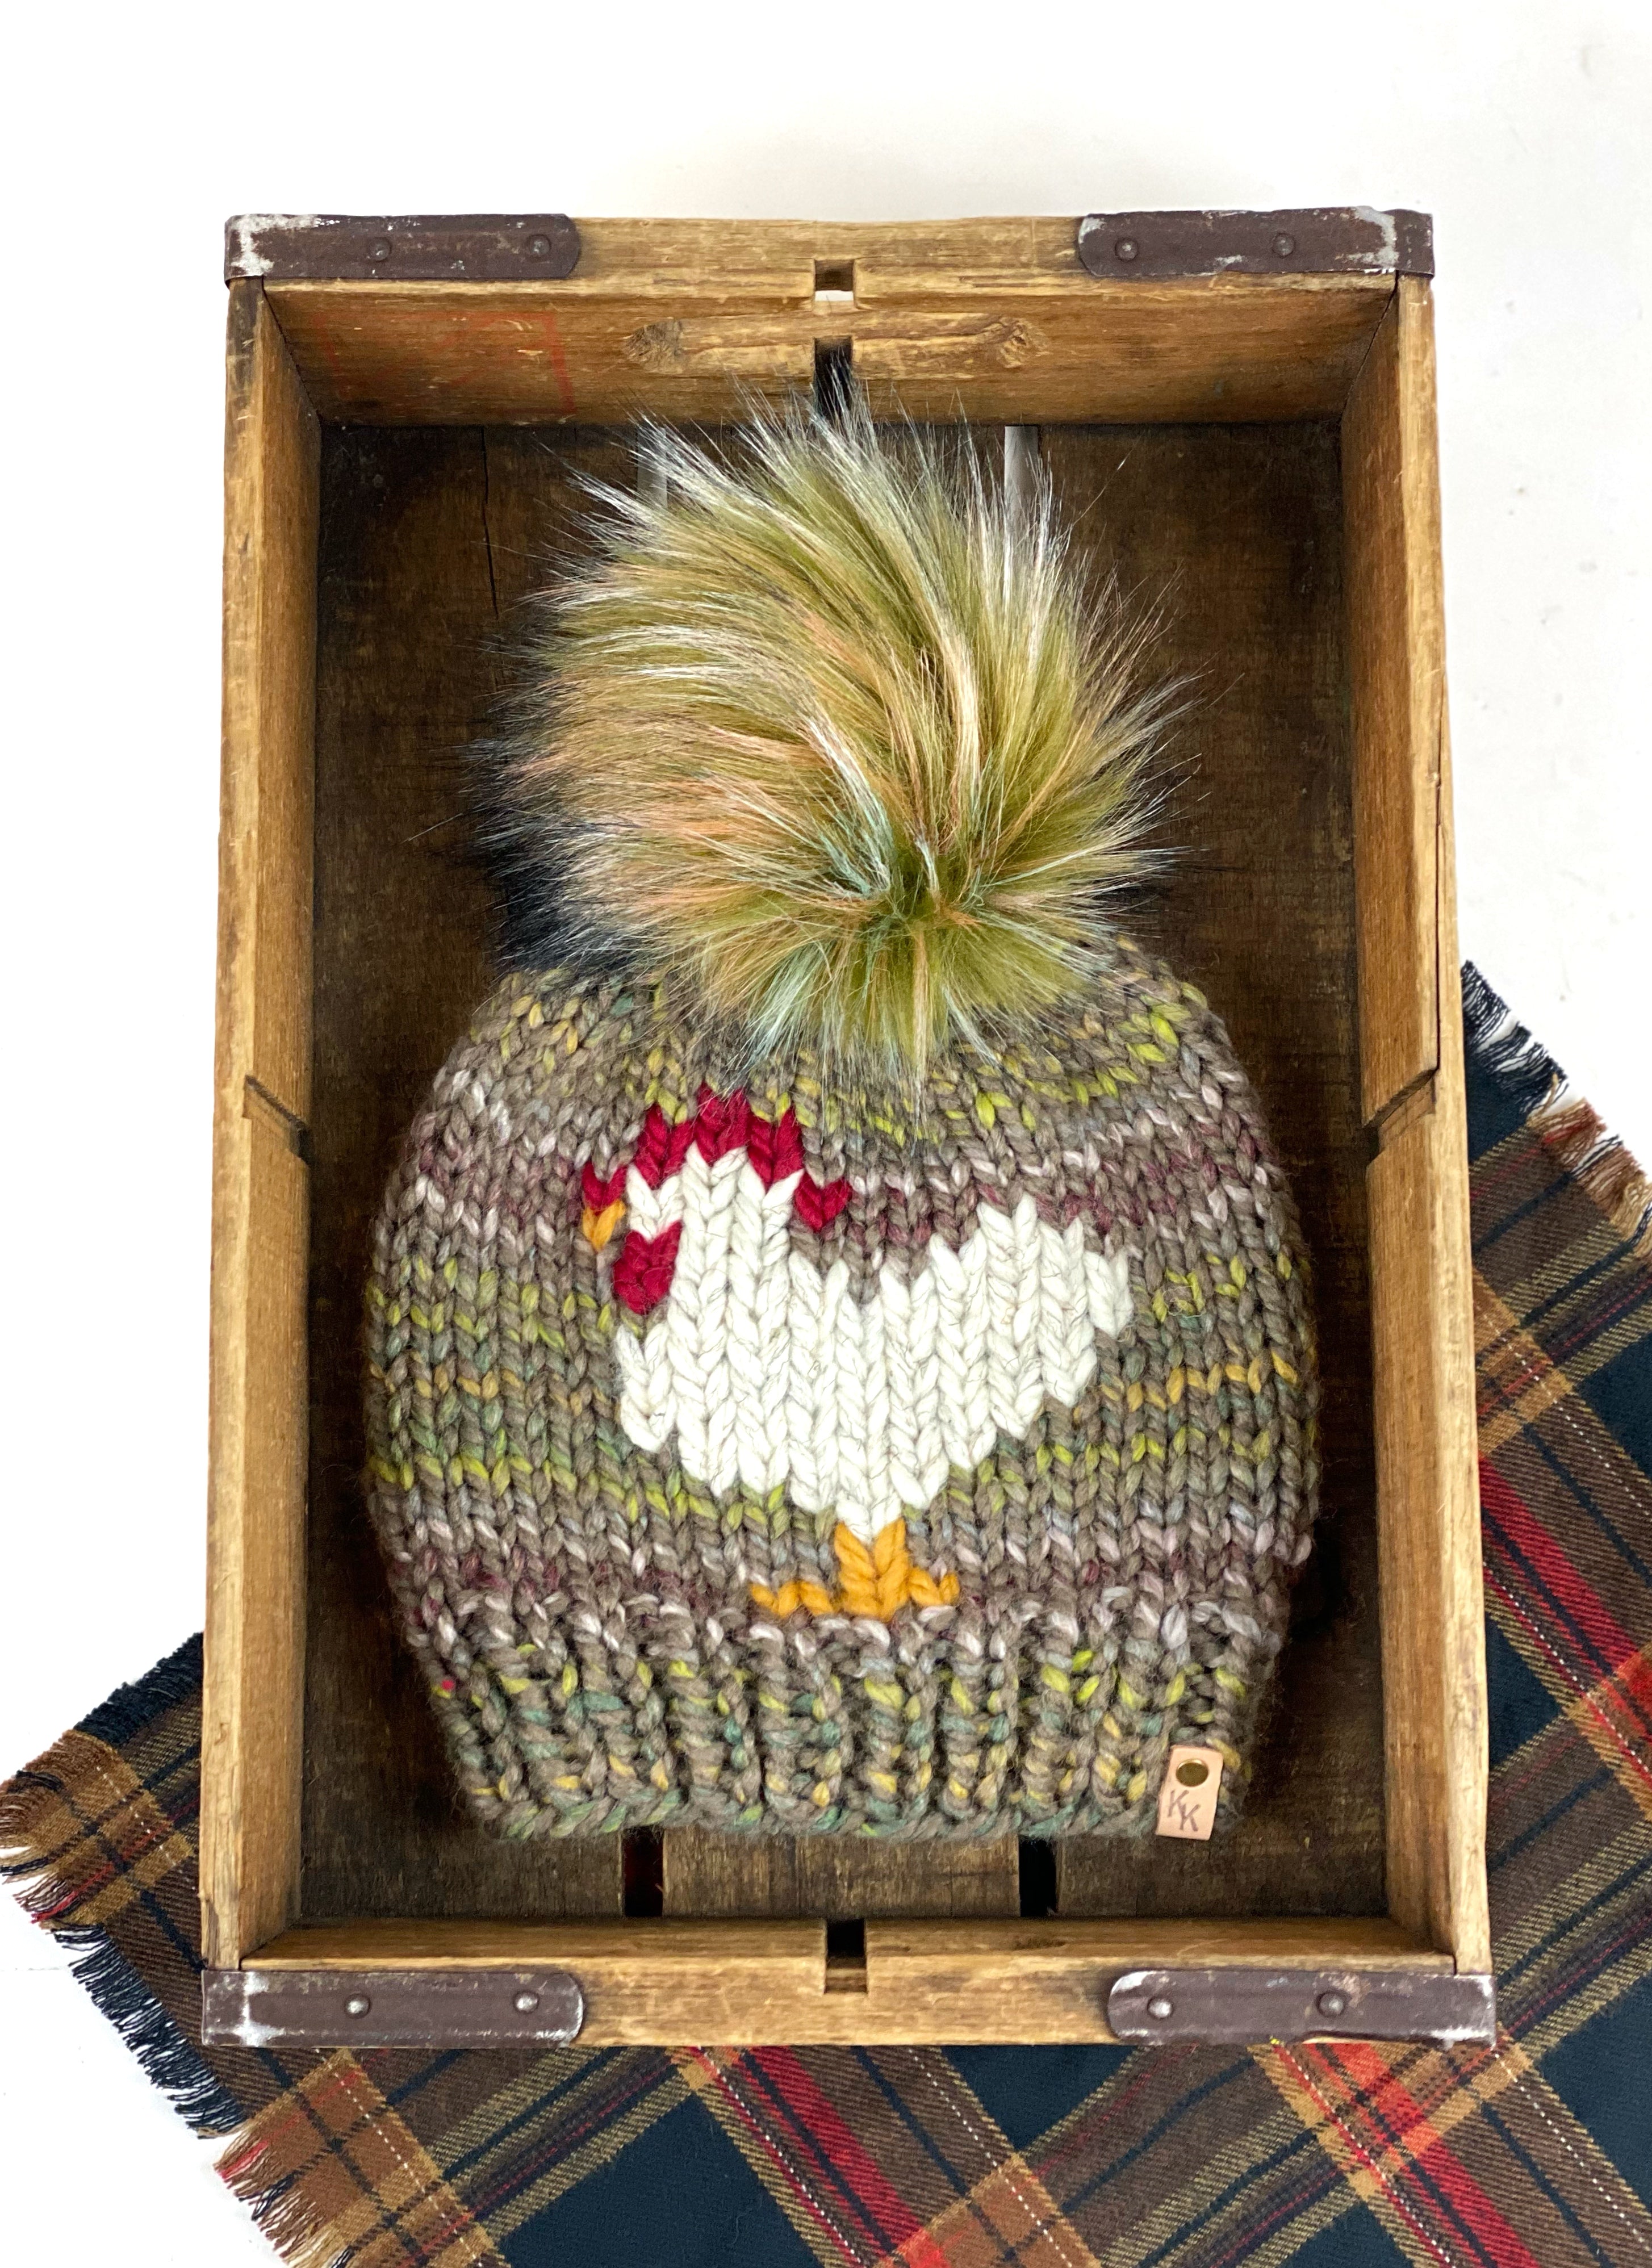 Knit Urban Camo Chicken Beanie Wool Blend Womens Adult Hat Faux Fur Pom Pom Hat